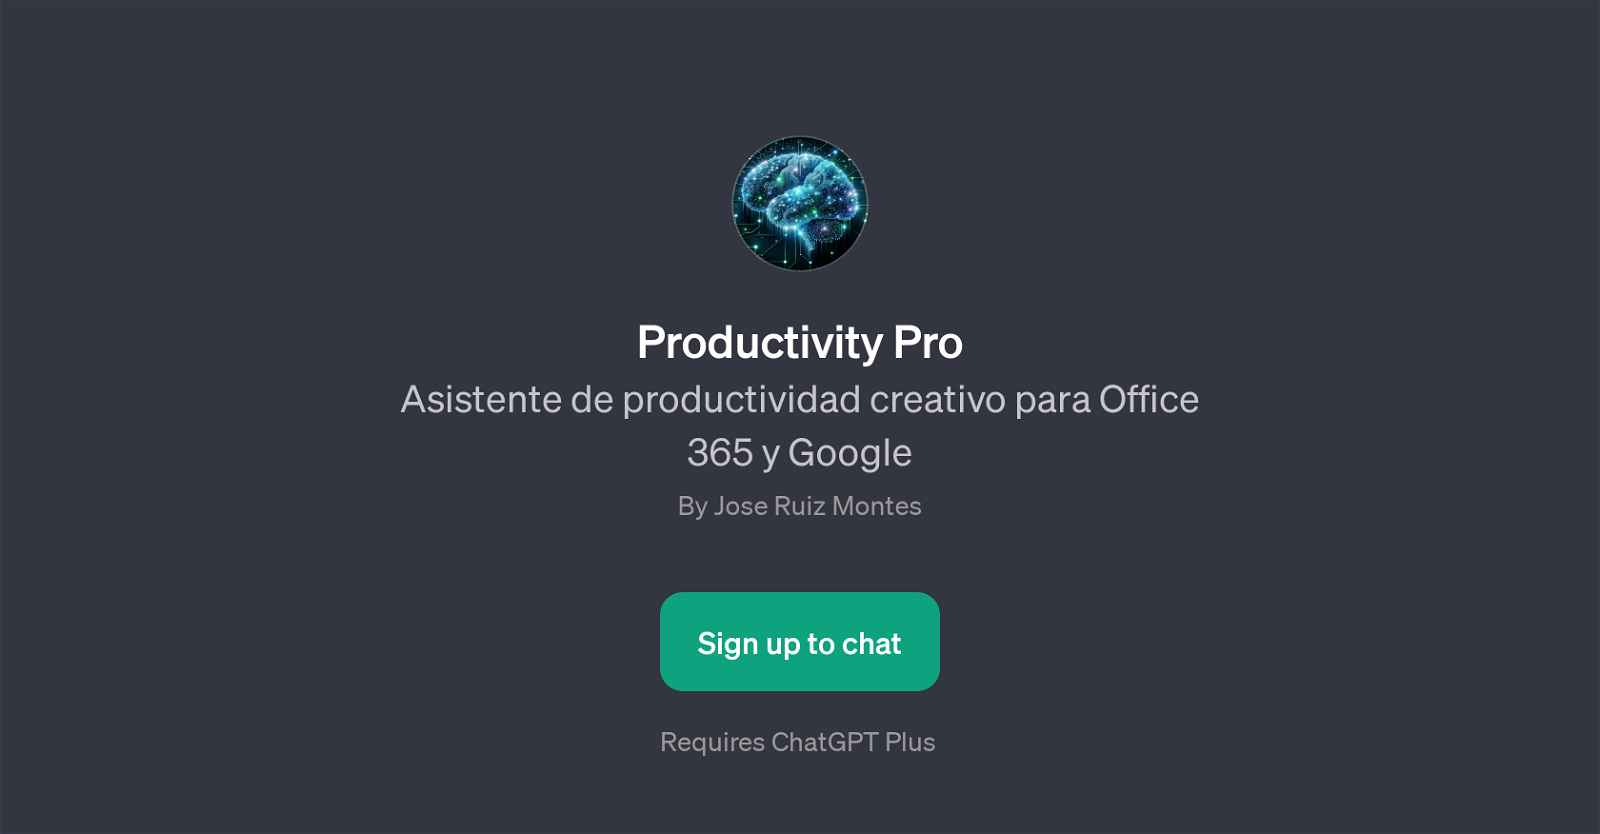 Productivity Pro website